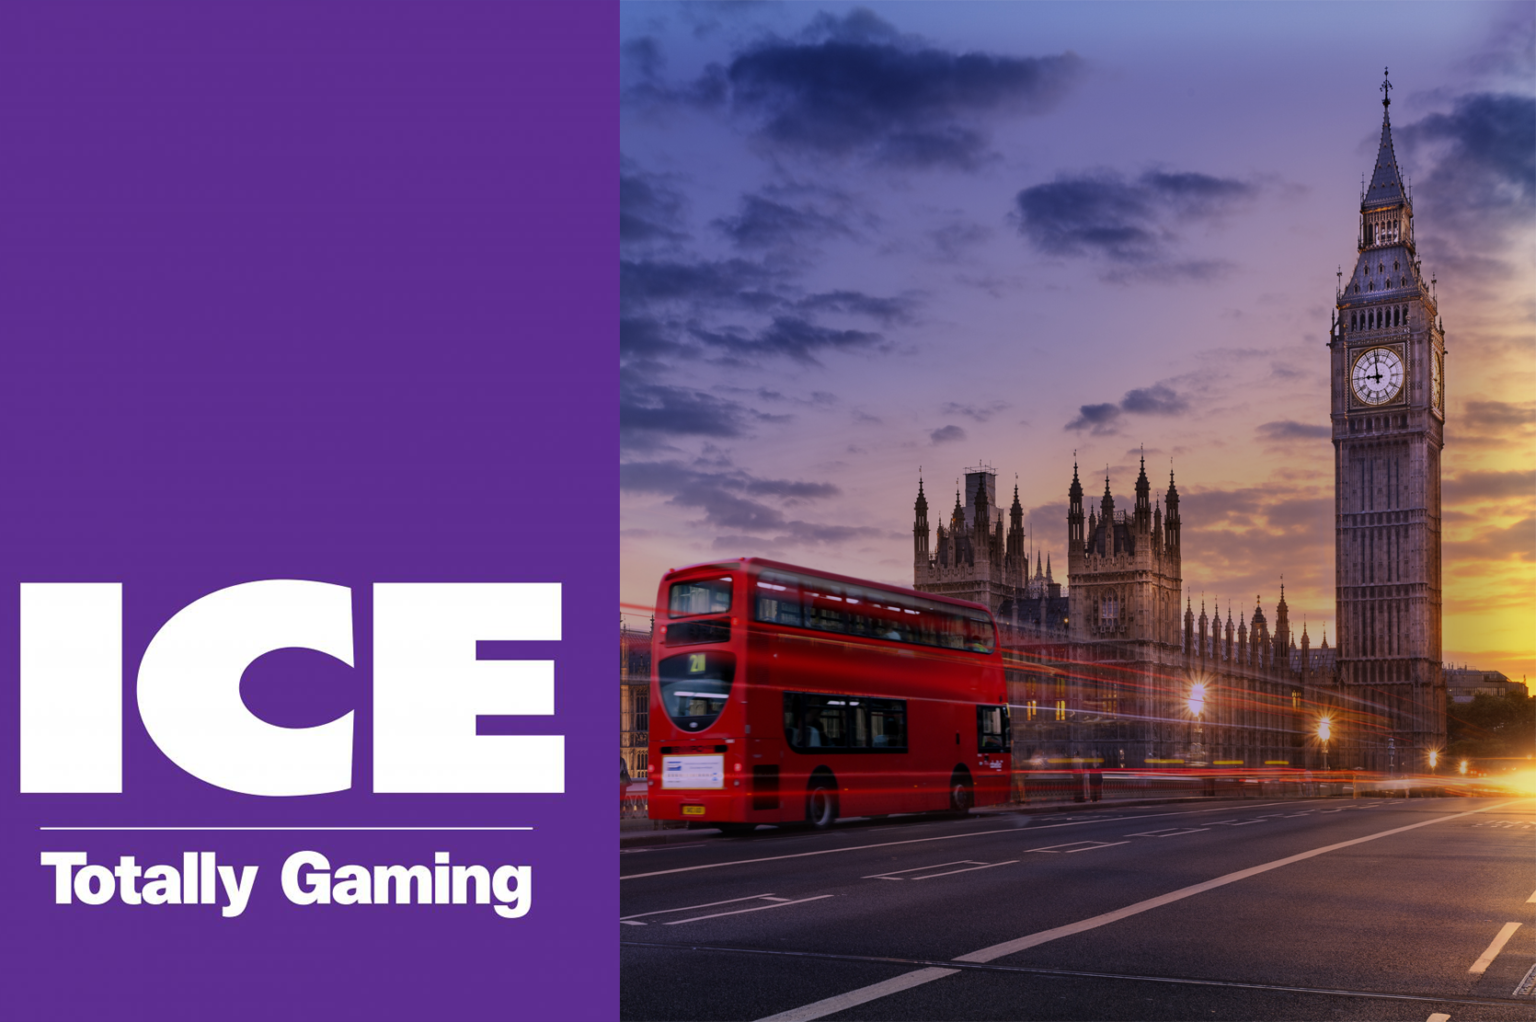 ice london 2017, gambling industry